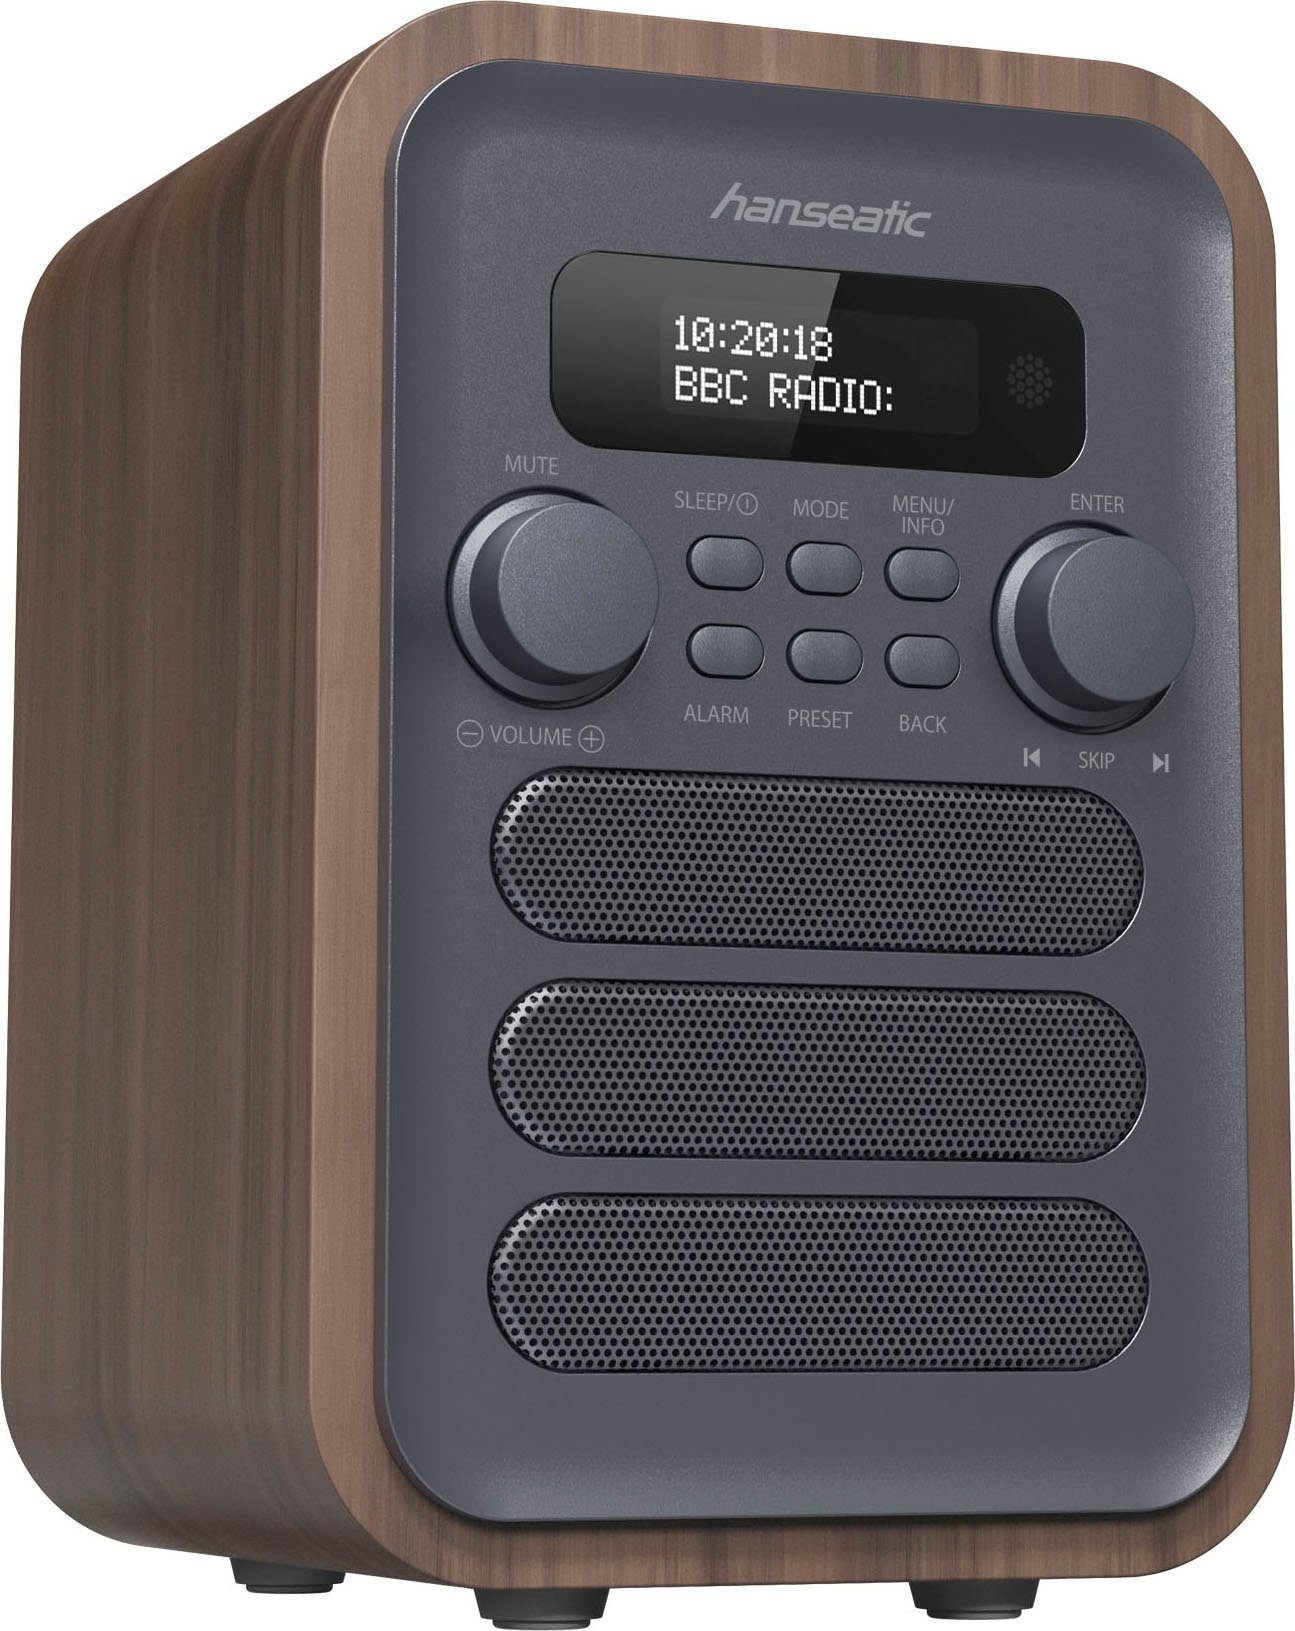 W) Hanseatic Digitalradio HRA-23 (3,5 (DAB) grau/braun